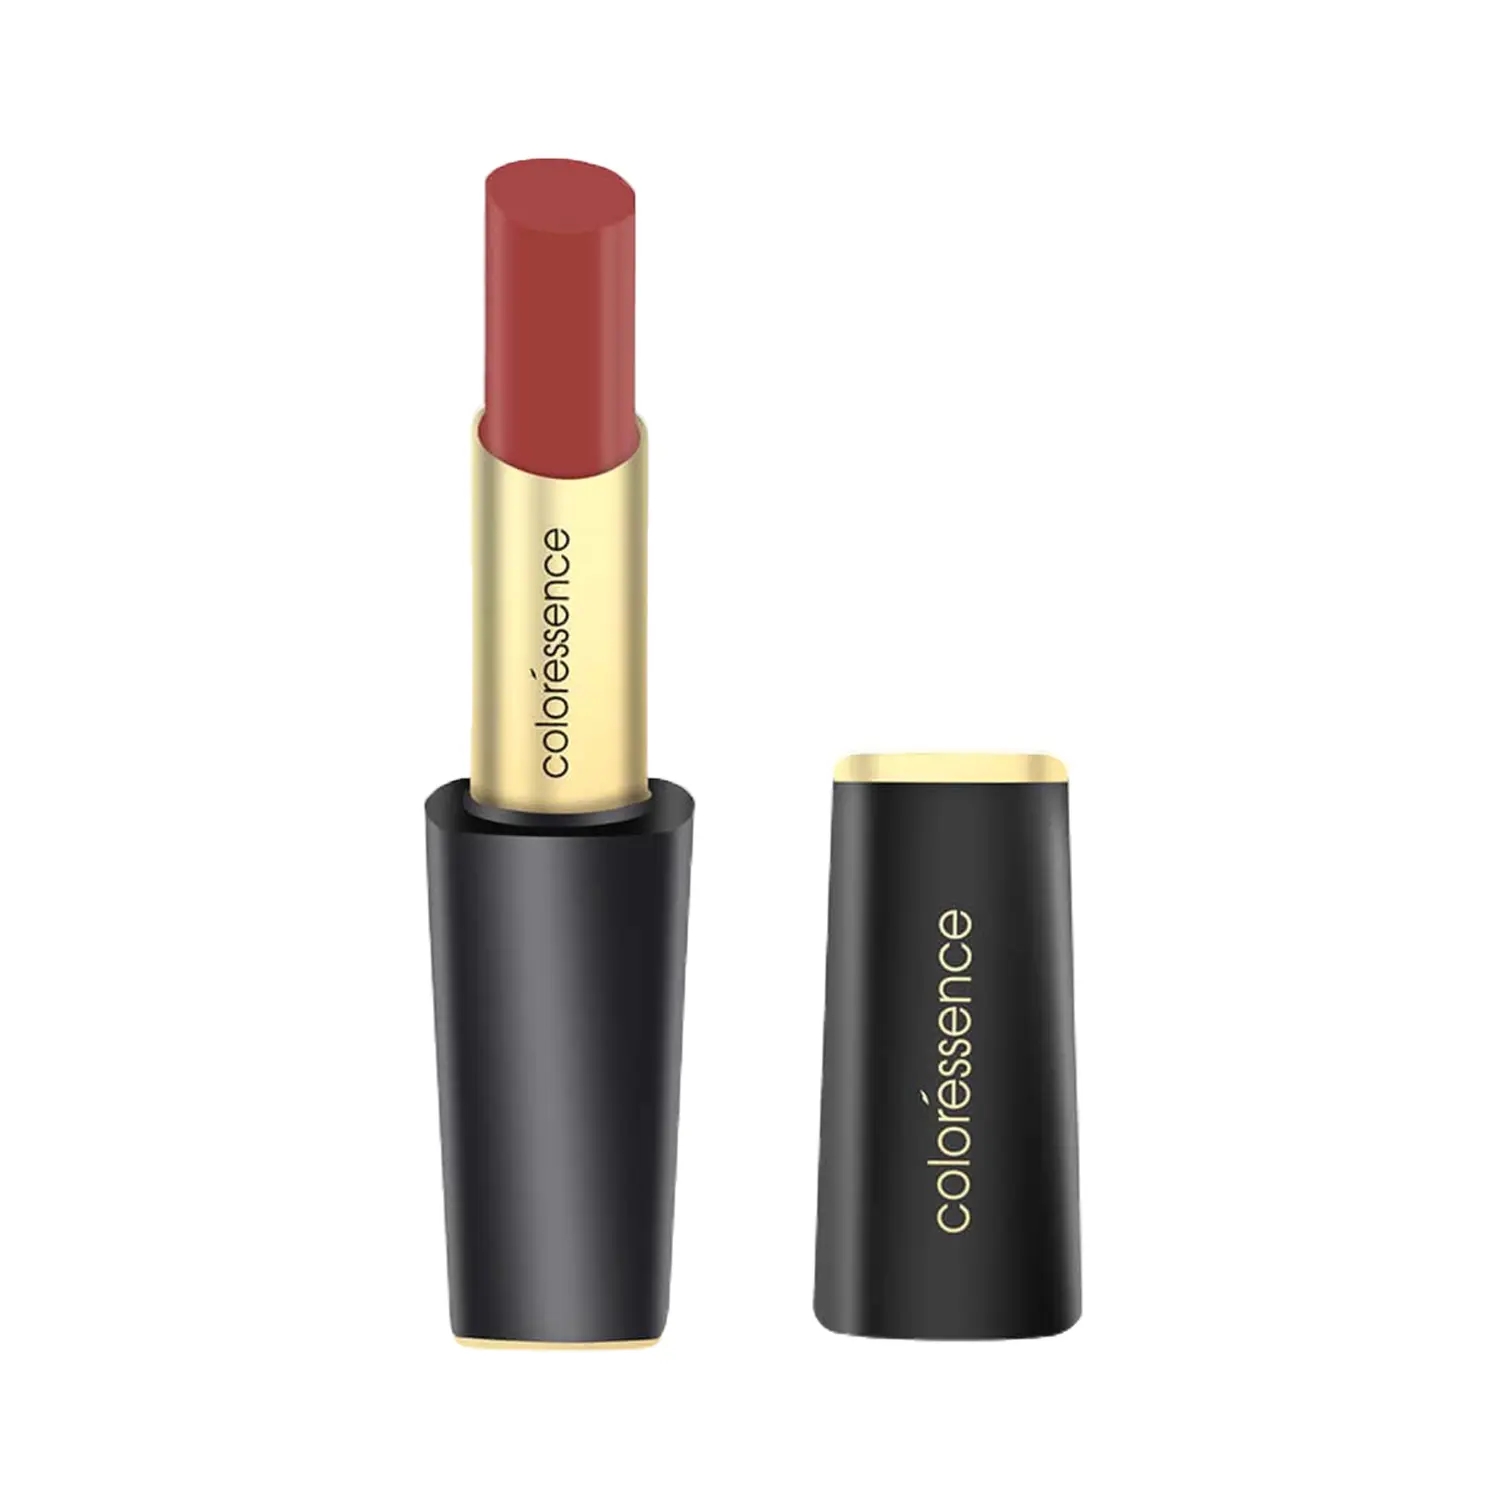 Coloressence | Coloressence Intense Long Wear Lip Color Glossy Lipstick - Petal (2.5g)